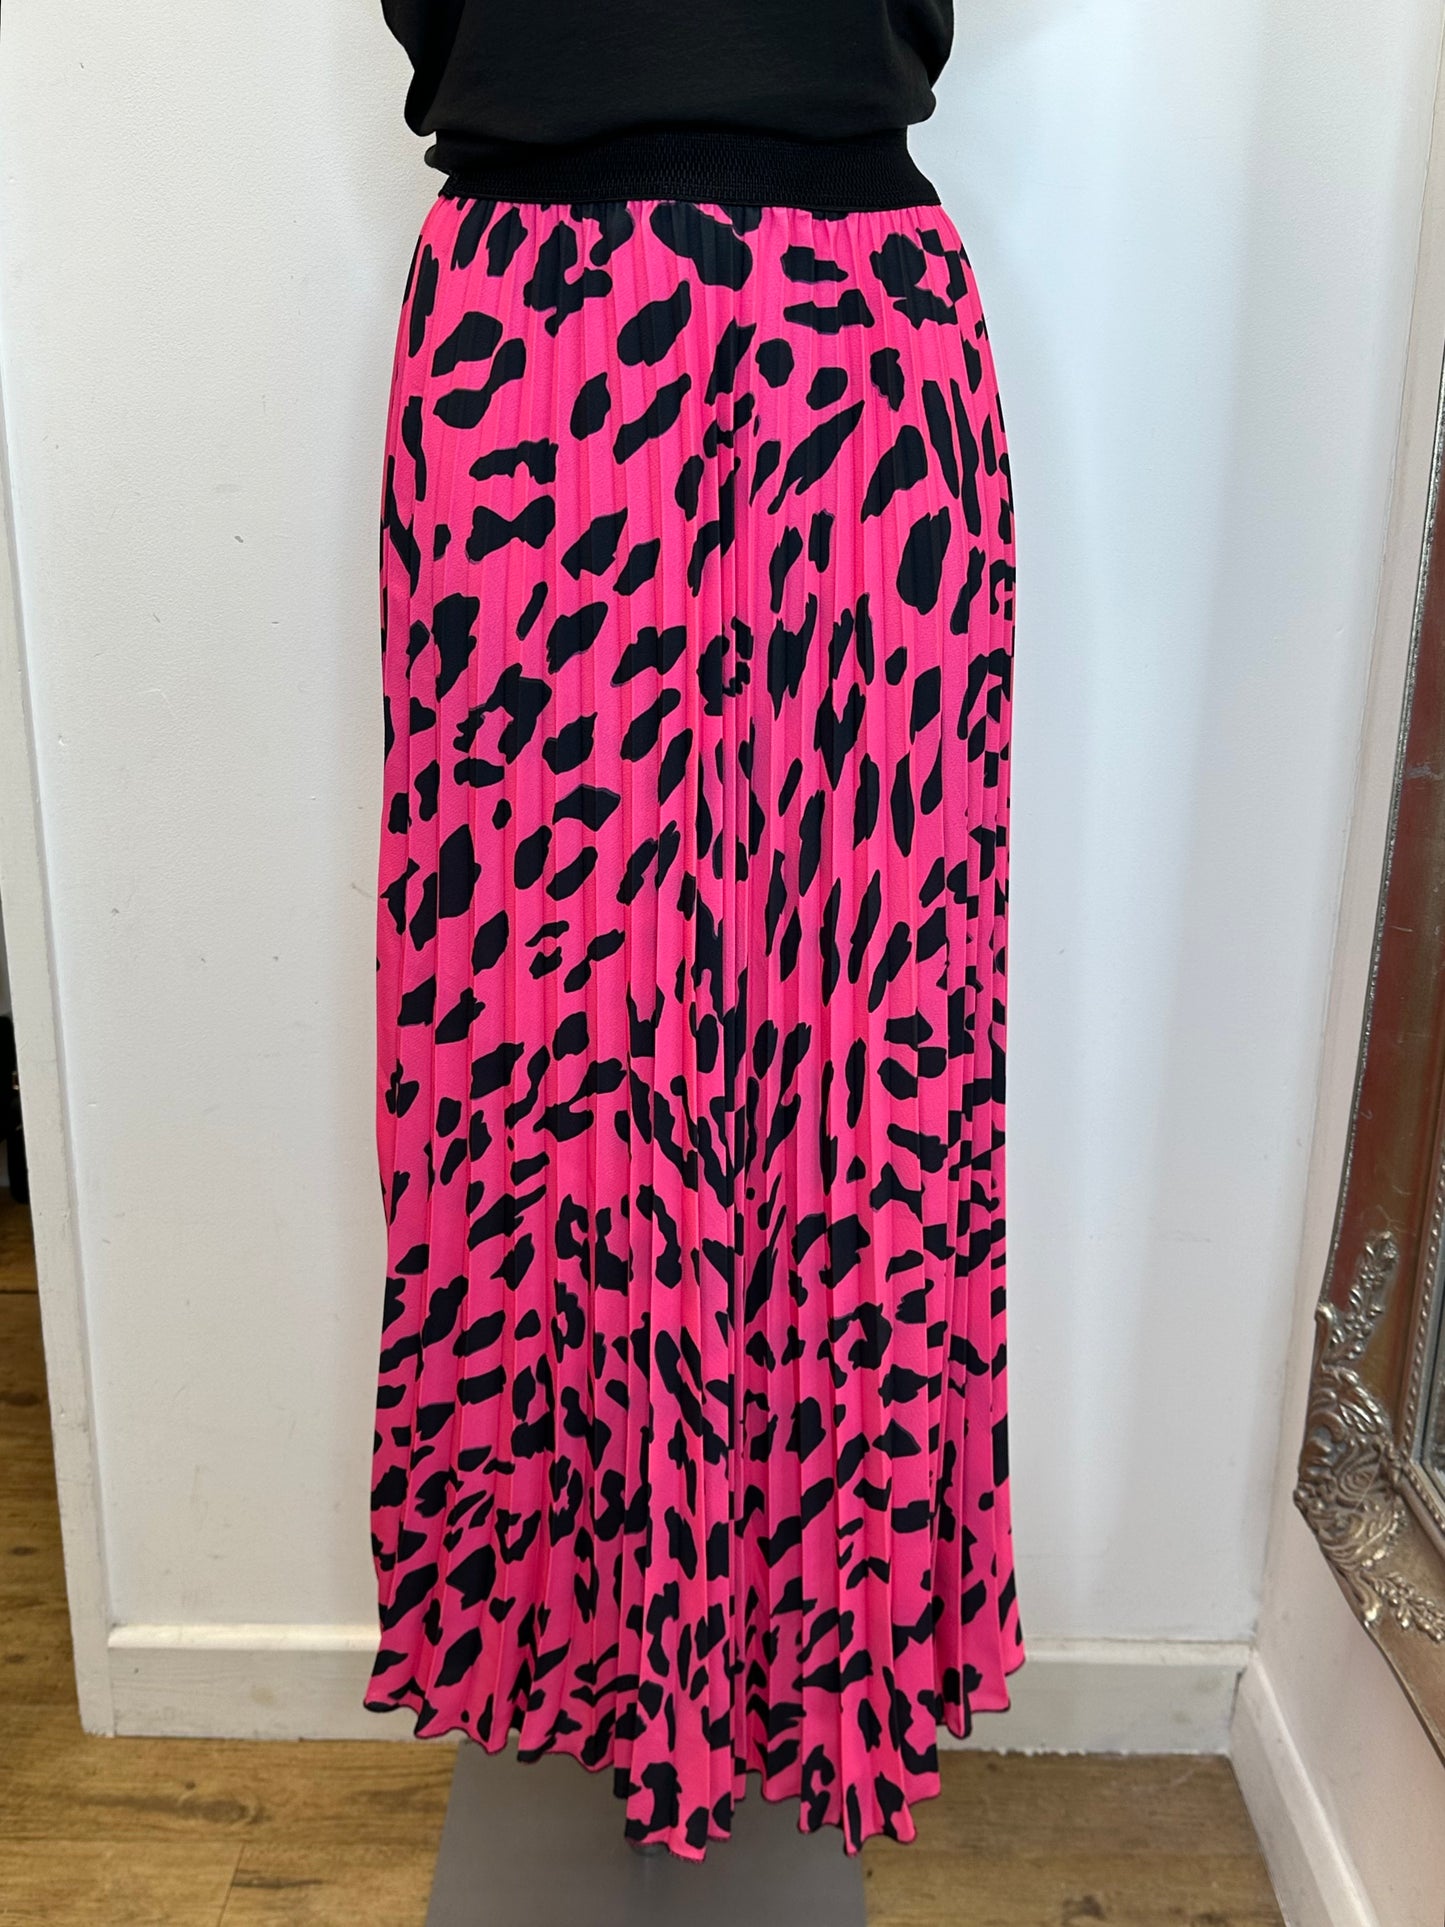 Animal print pleated skirt - Fuchsia pink colour